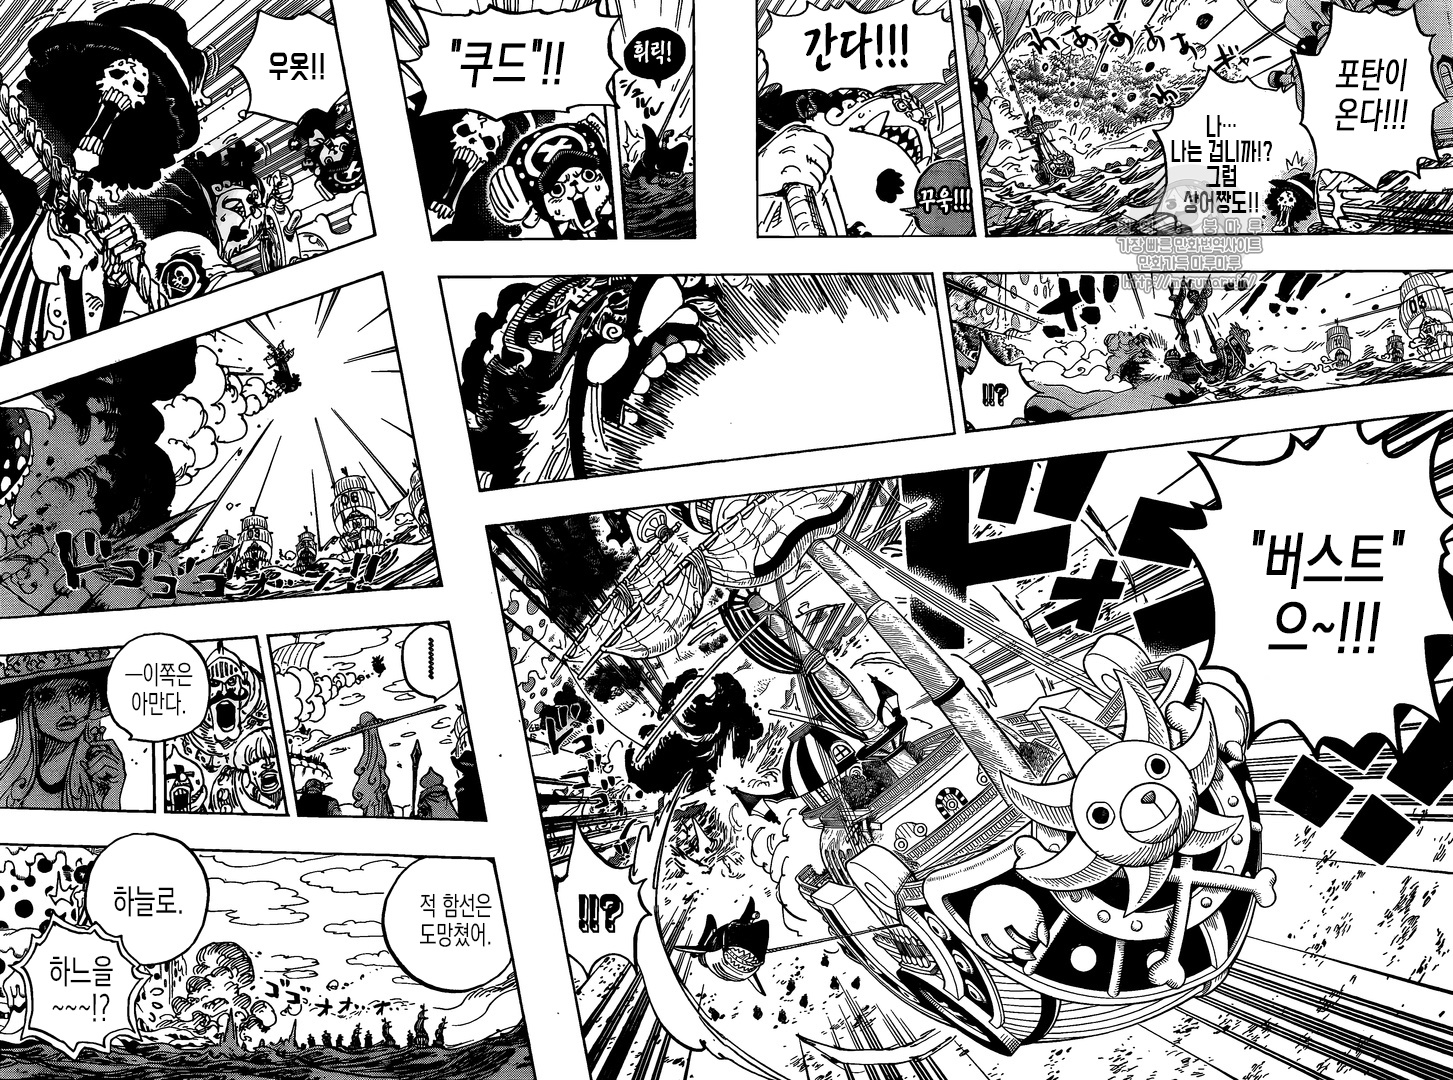 One Piece Manga 878 [MaruMaru]